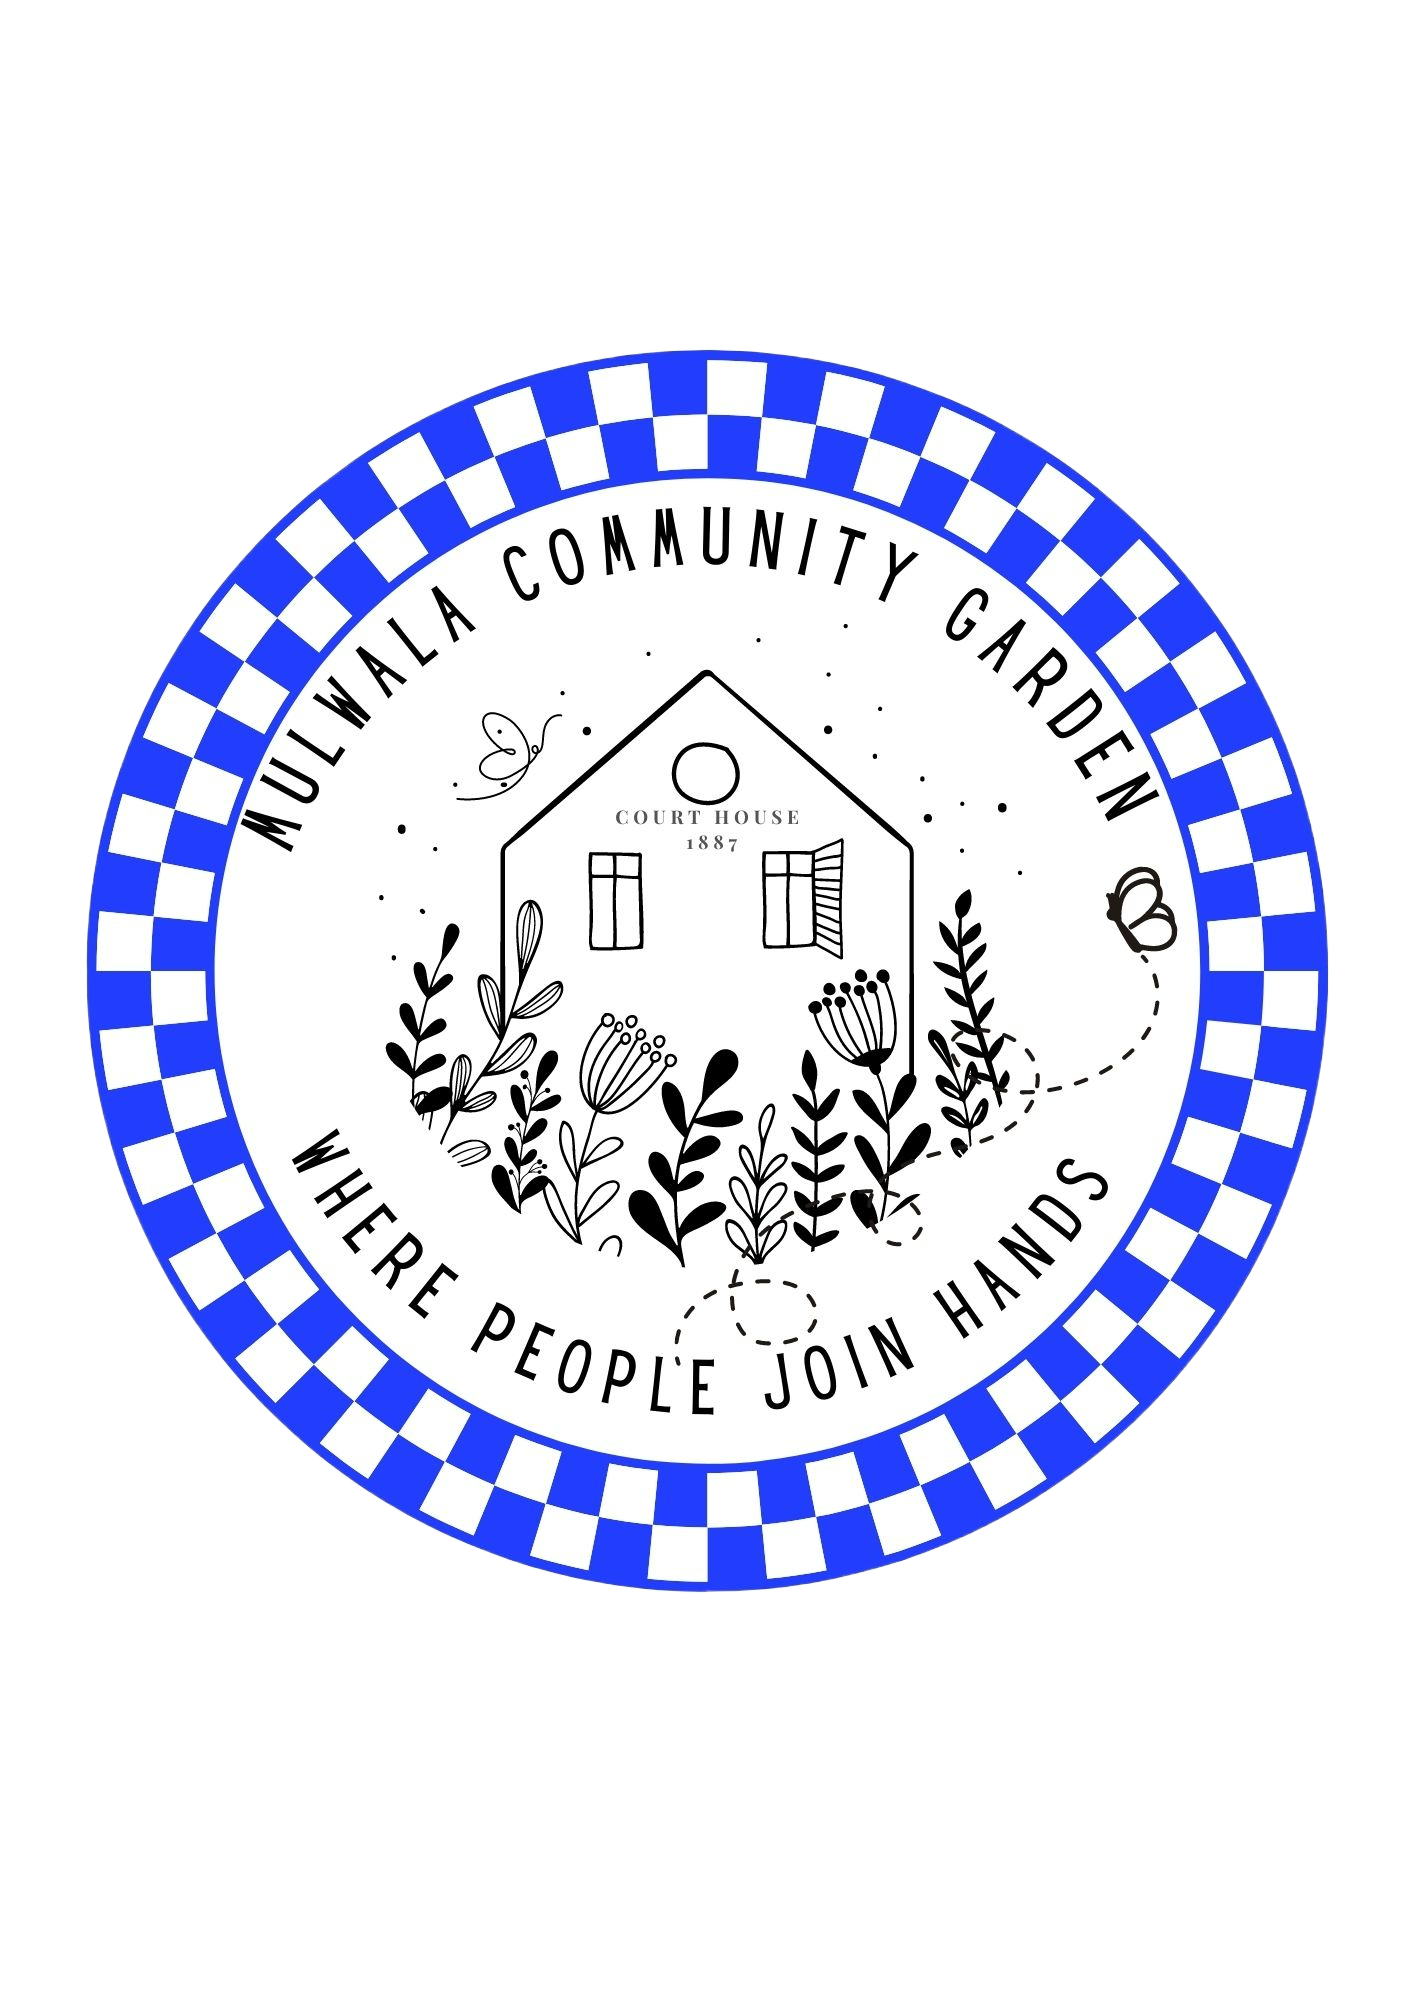 Mulwala Community Garden Incorporated logo